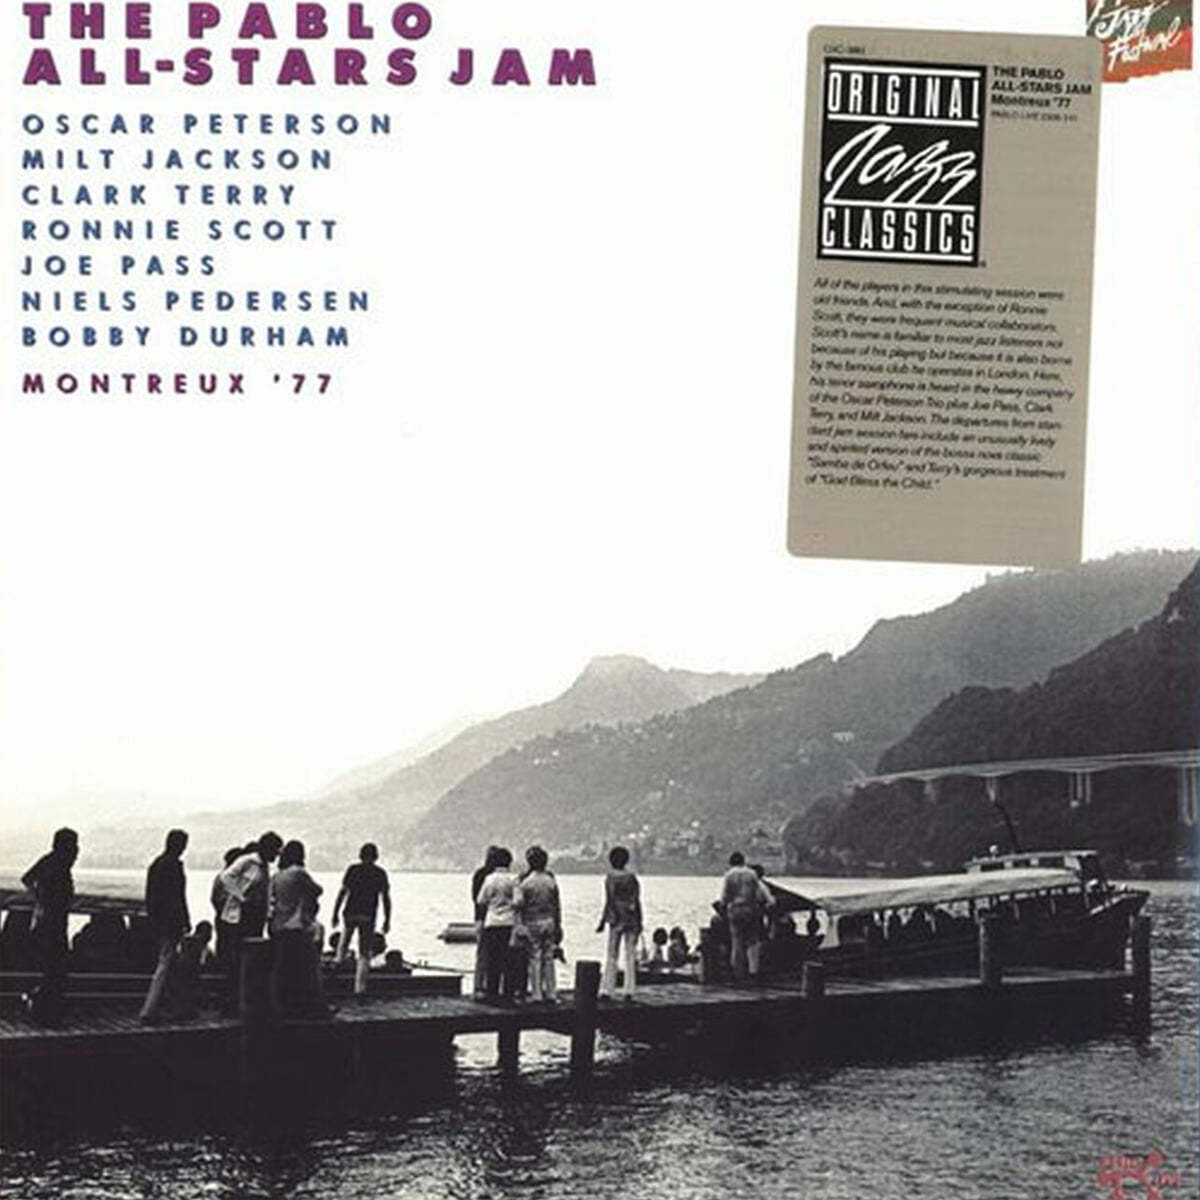 Oscar Peterson / The Pablo All-Stars Jam (오스카 피터슨, 더 파블로 올스타스 잼) - Montreux &#39;77 [LP]